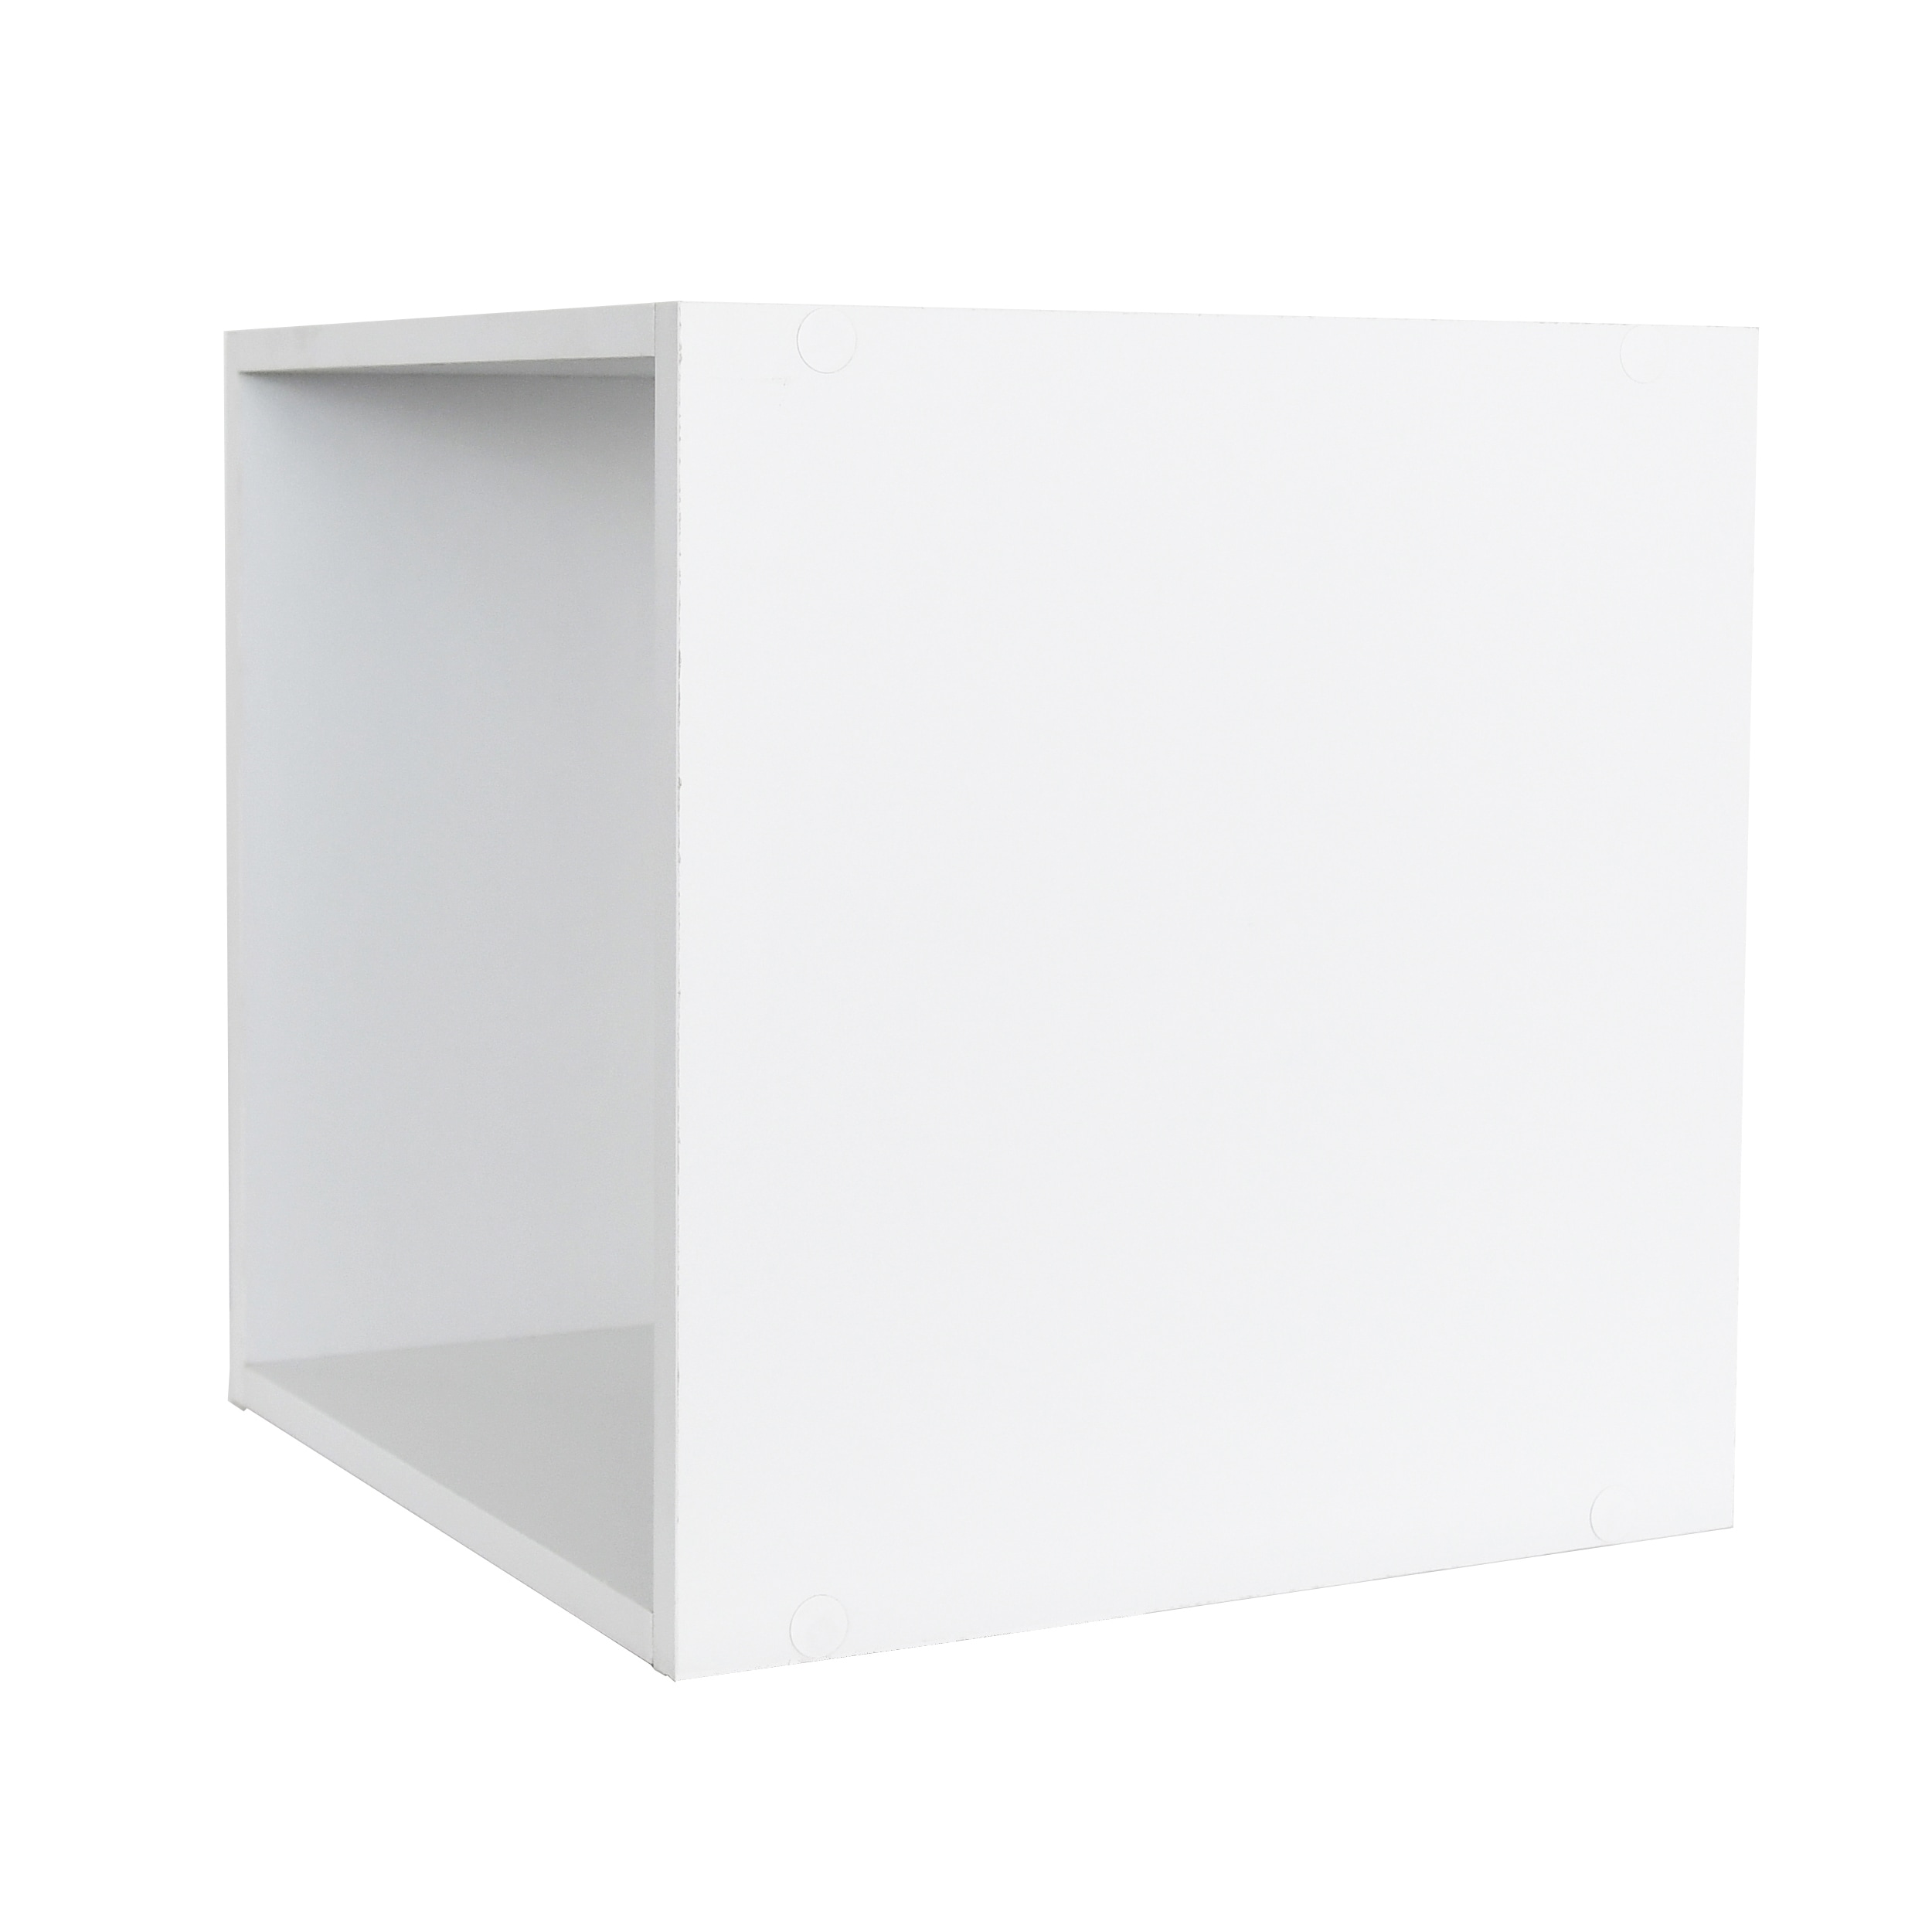 pc12pkwh6totent, Storage Organizer Open Bookshelf Set- 12 Cubes 6 Canvas  Bins- White Wood Grain/Natural